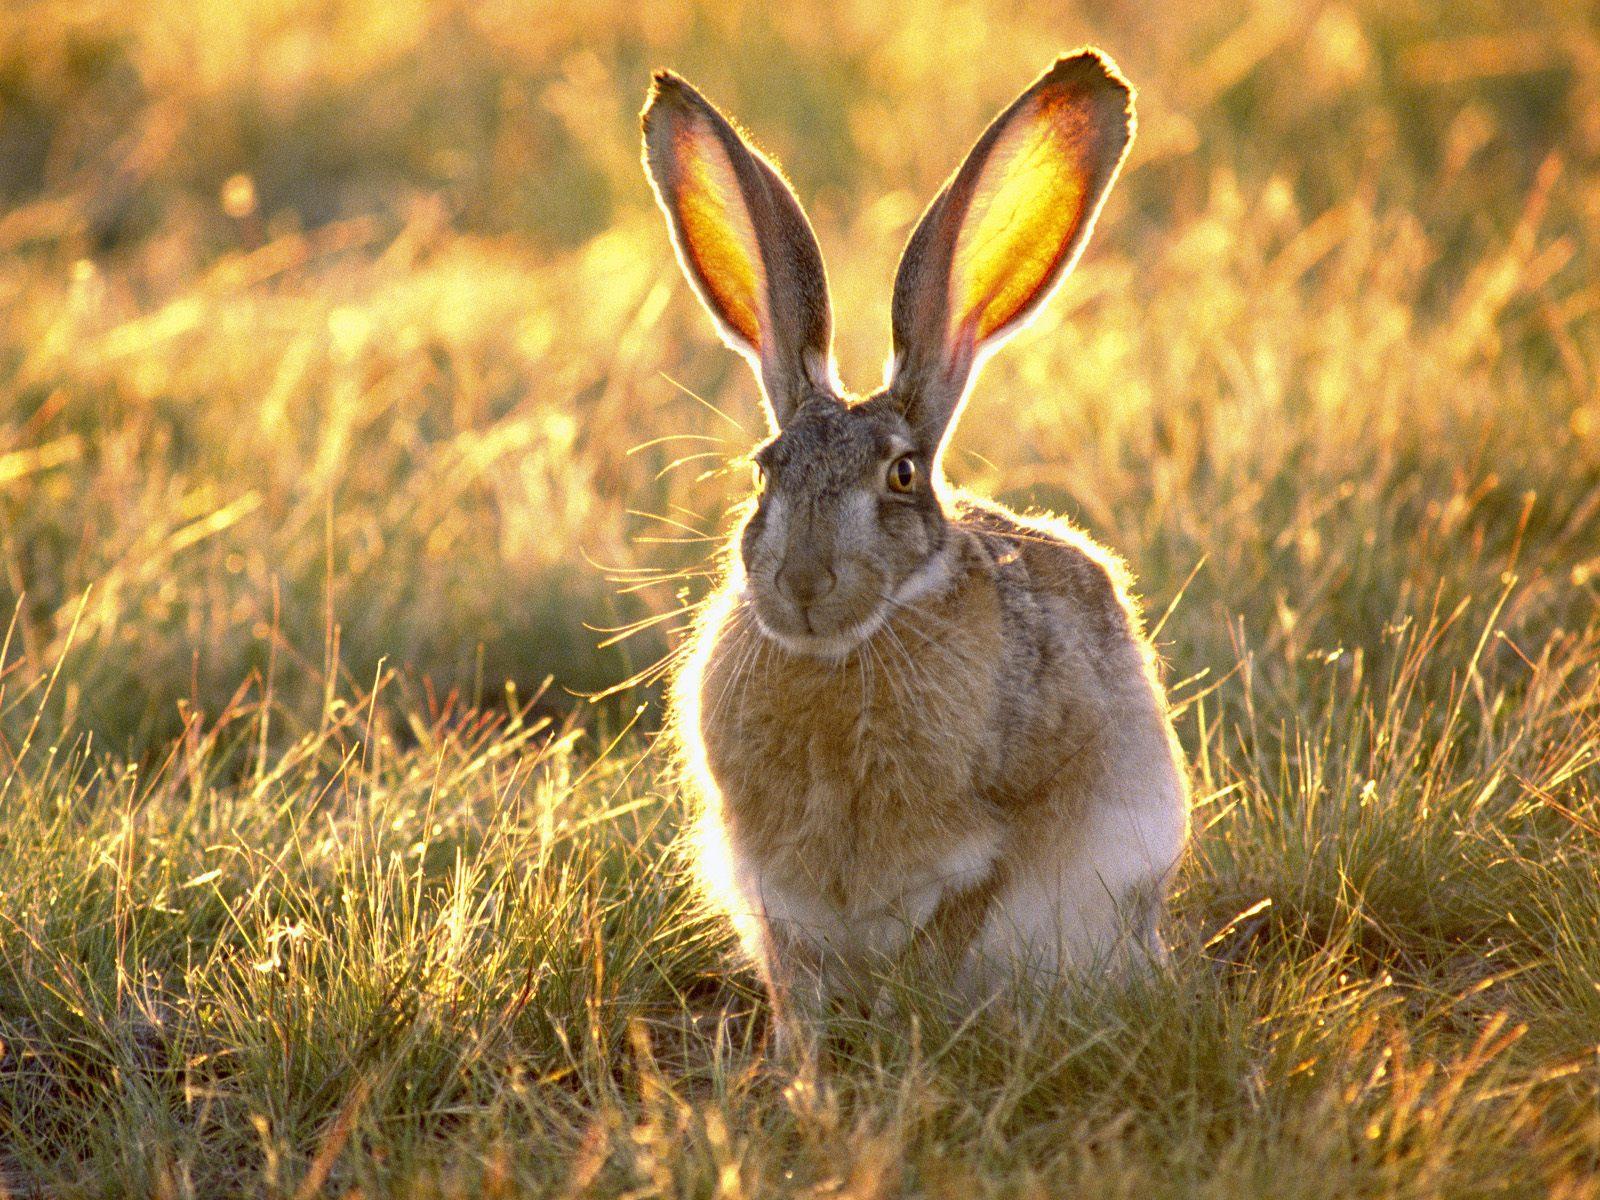 Eared rabbit